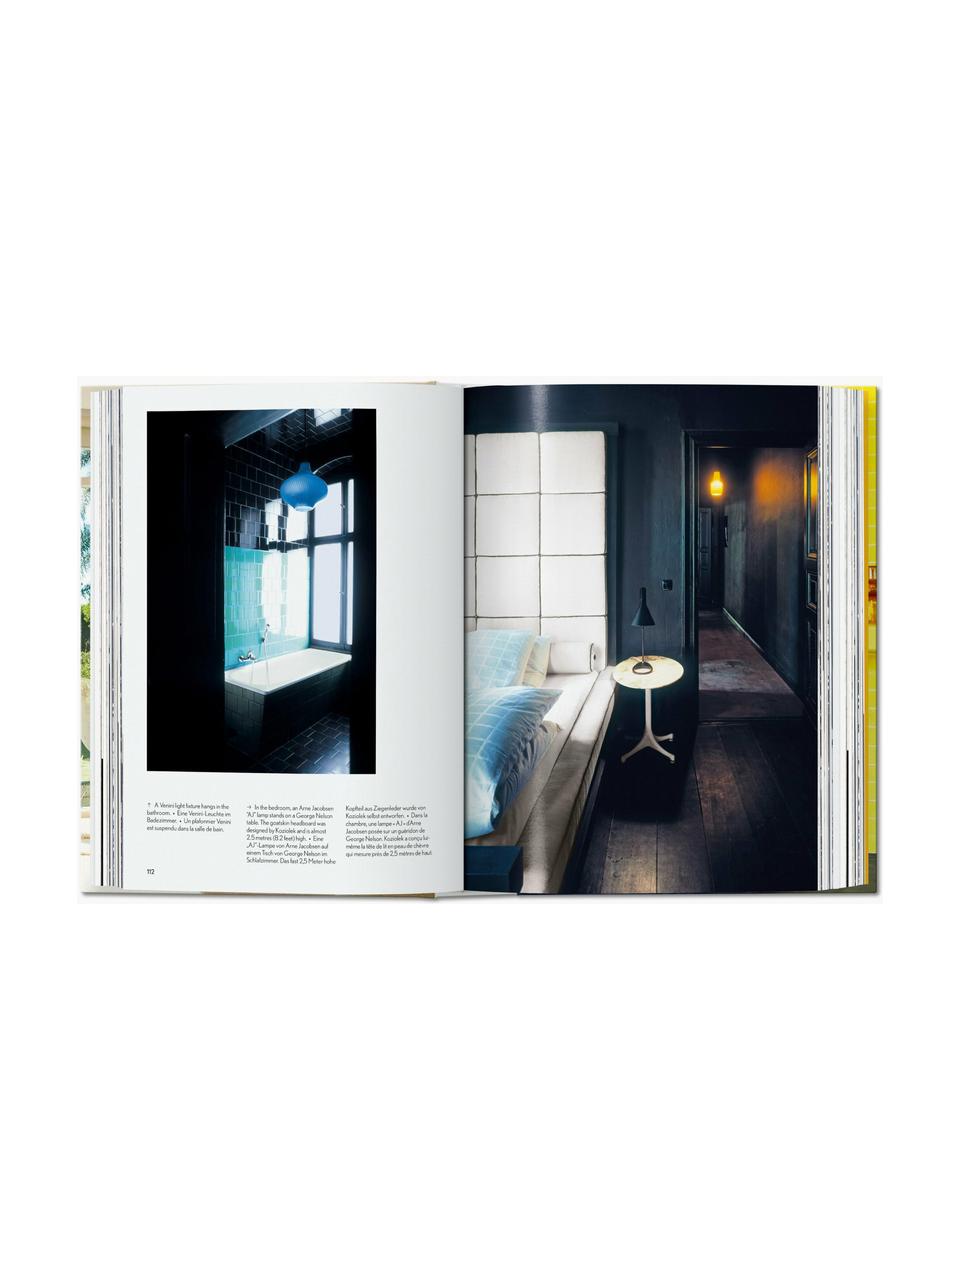 Bildband Interiors Now!, Papier, Hardcover, Interiors Now!, B 16 x H 22 cm